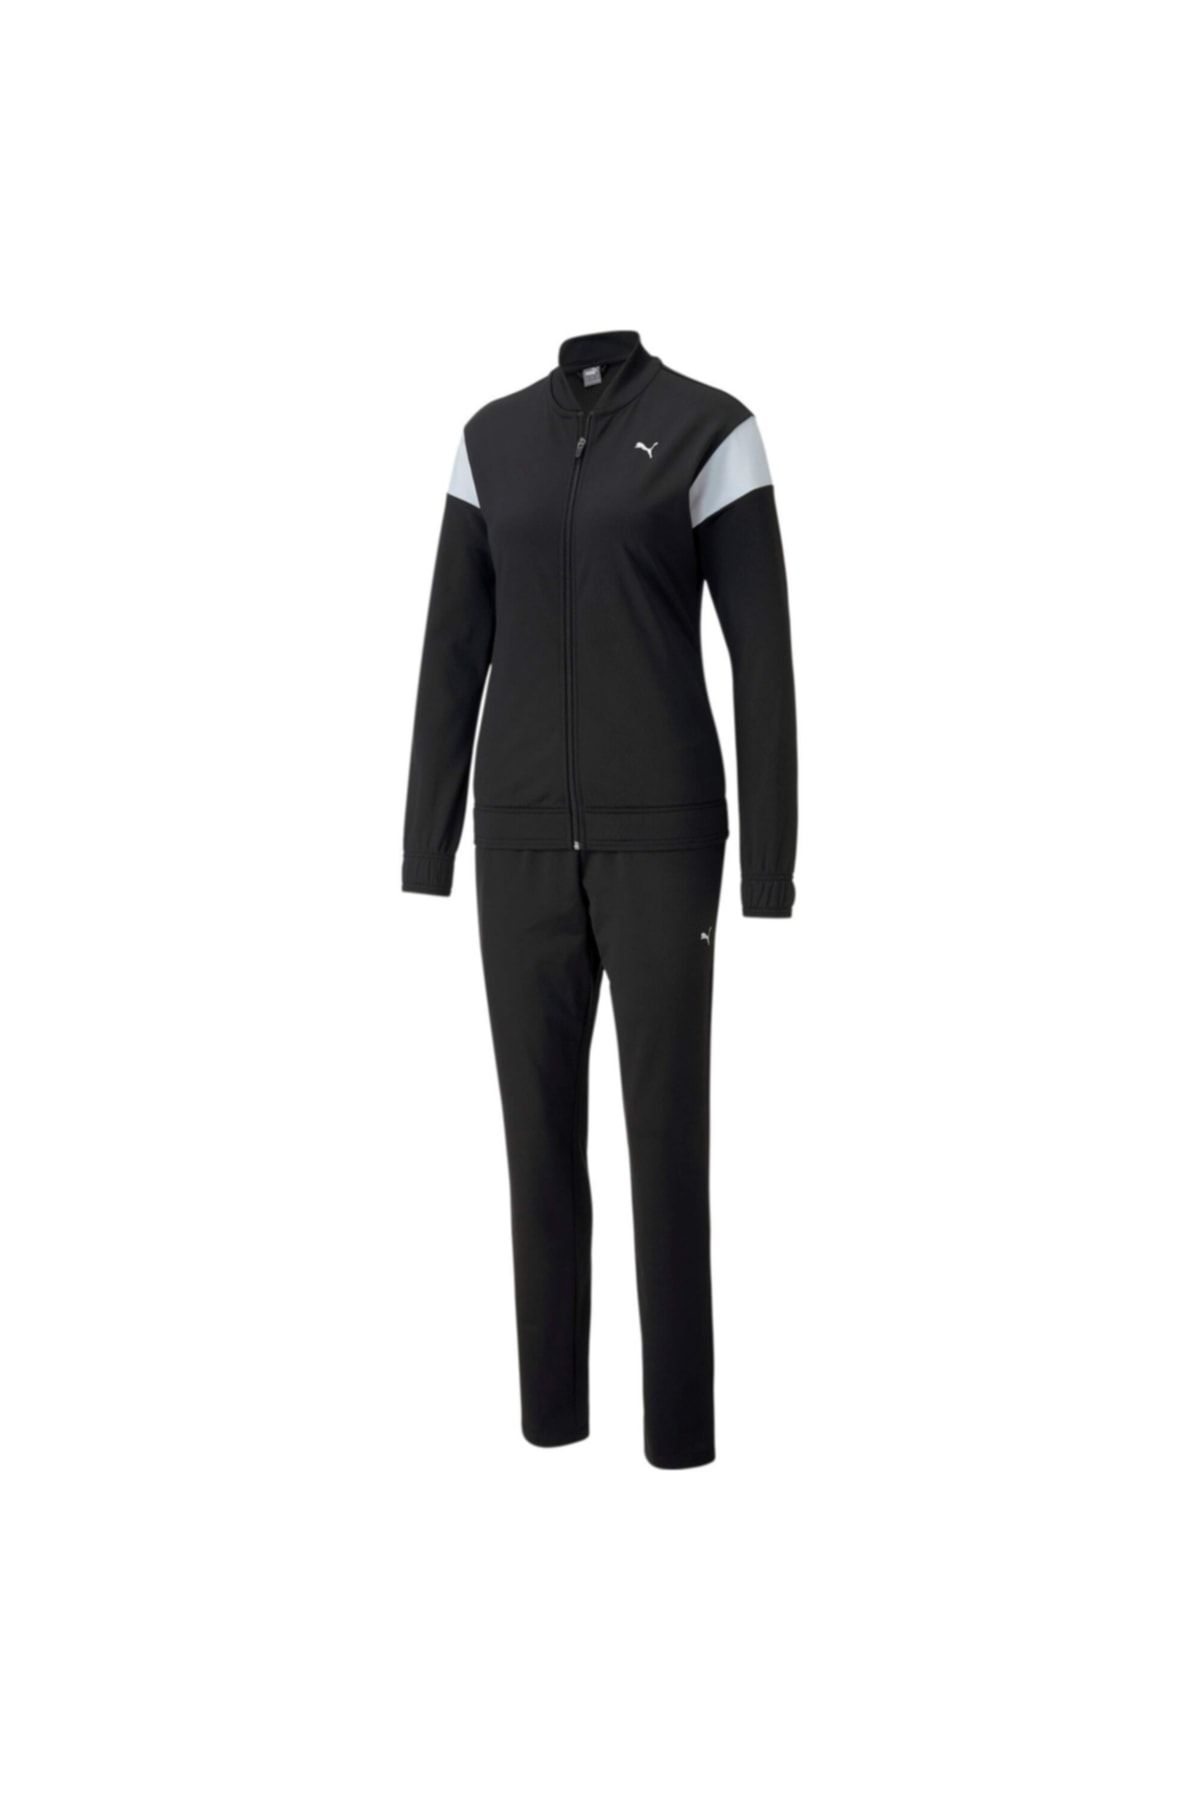 Puma Kadın Spor Eşofman Takımı - Classic Tricot Suit op - 58365601